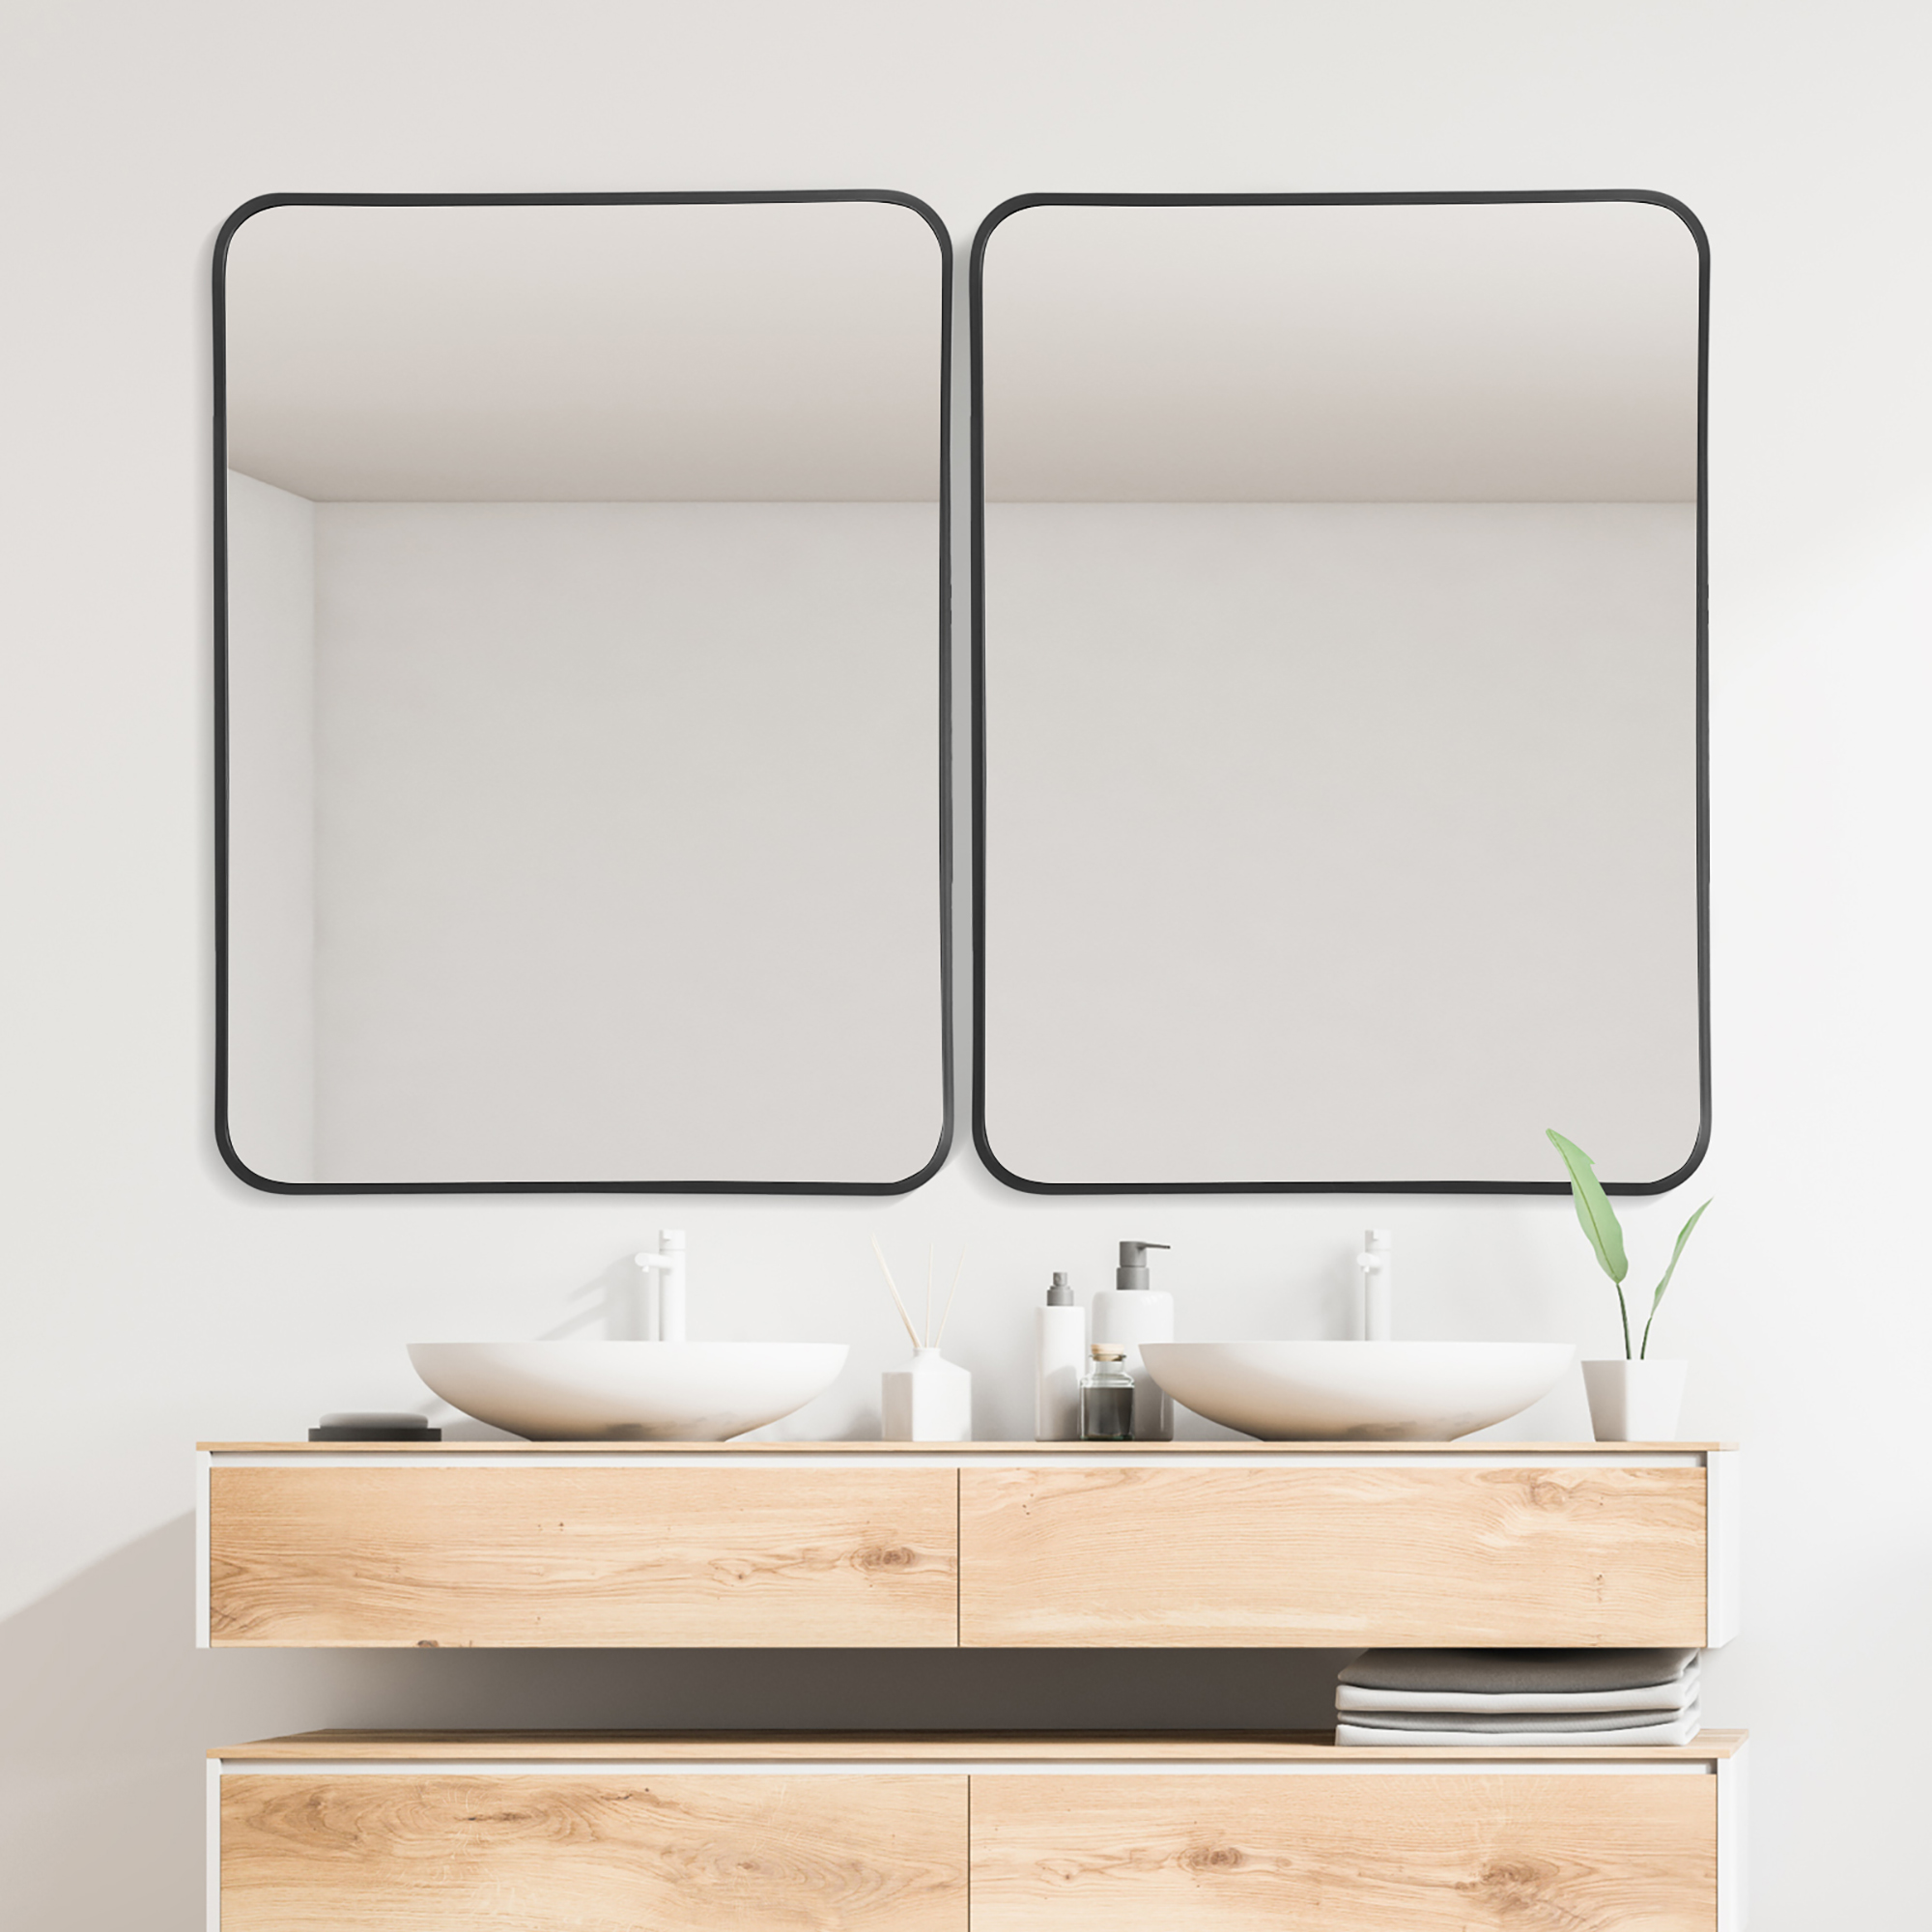 Costway 22''x 30''Bathroom Wall Mounted Mirror Aluminum Alloy Frame Decor Gold\Black